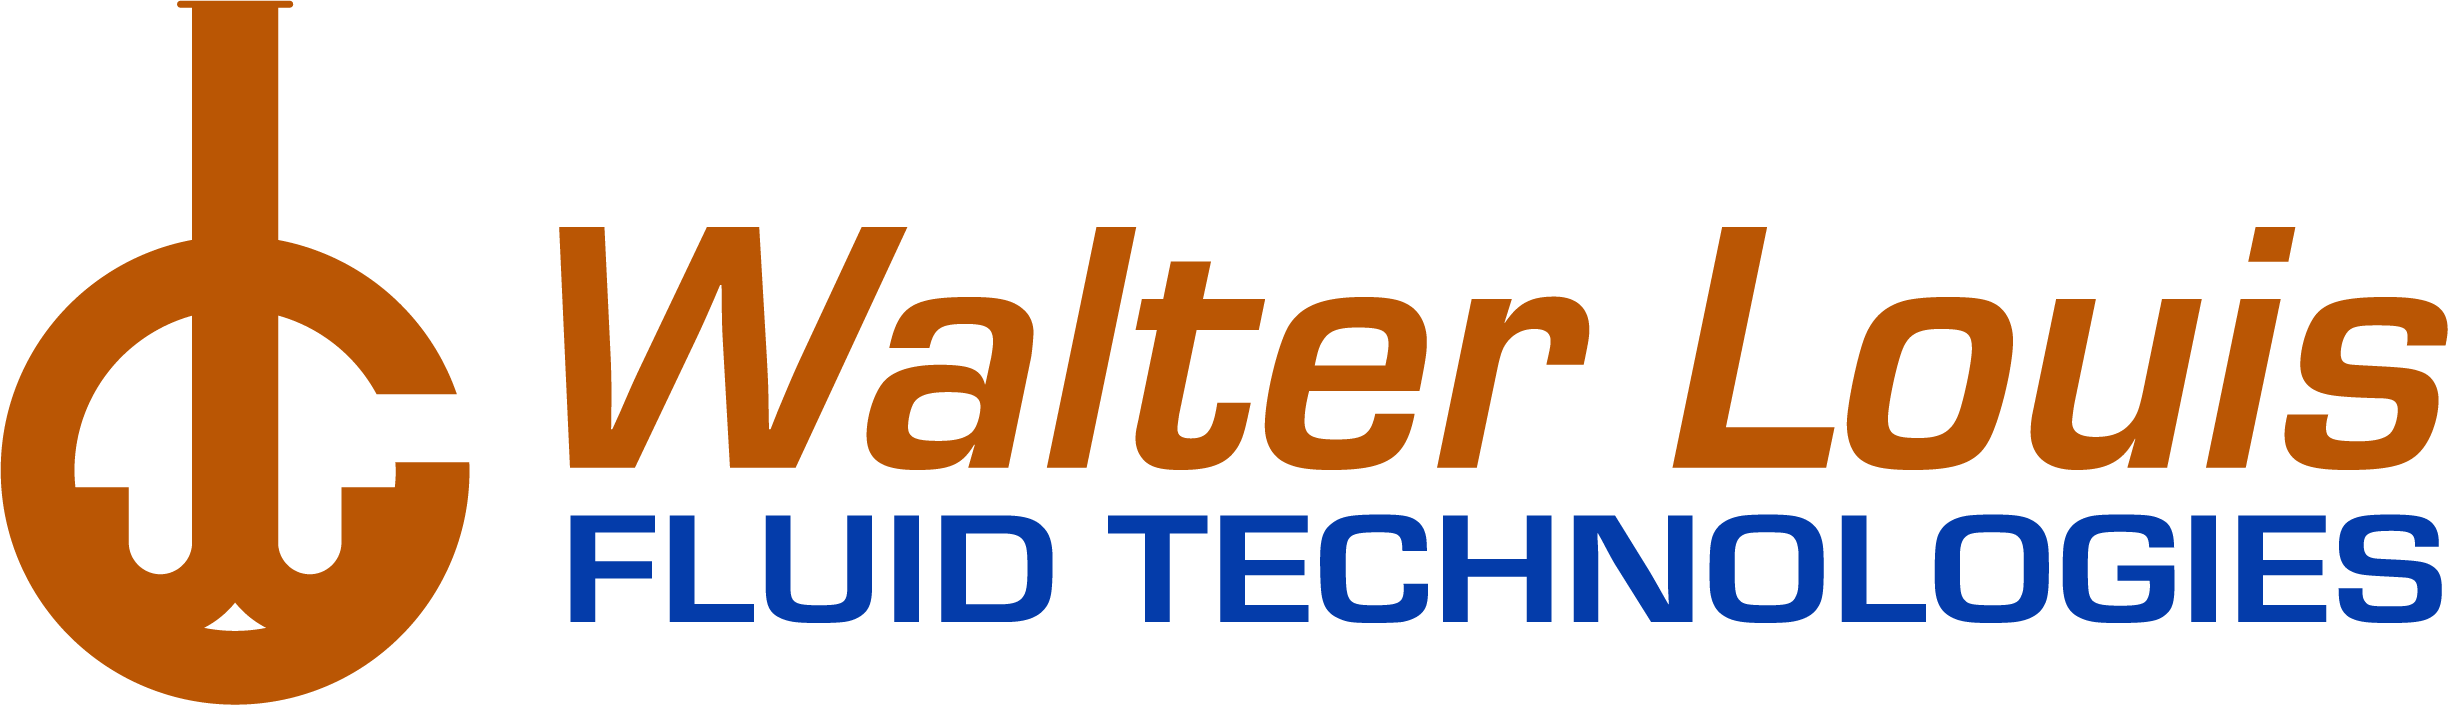 Walter Louis Fluid Technologies